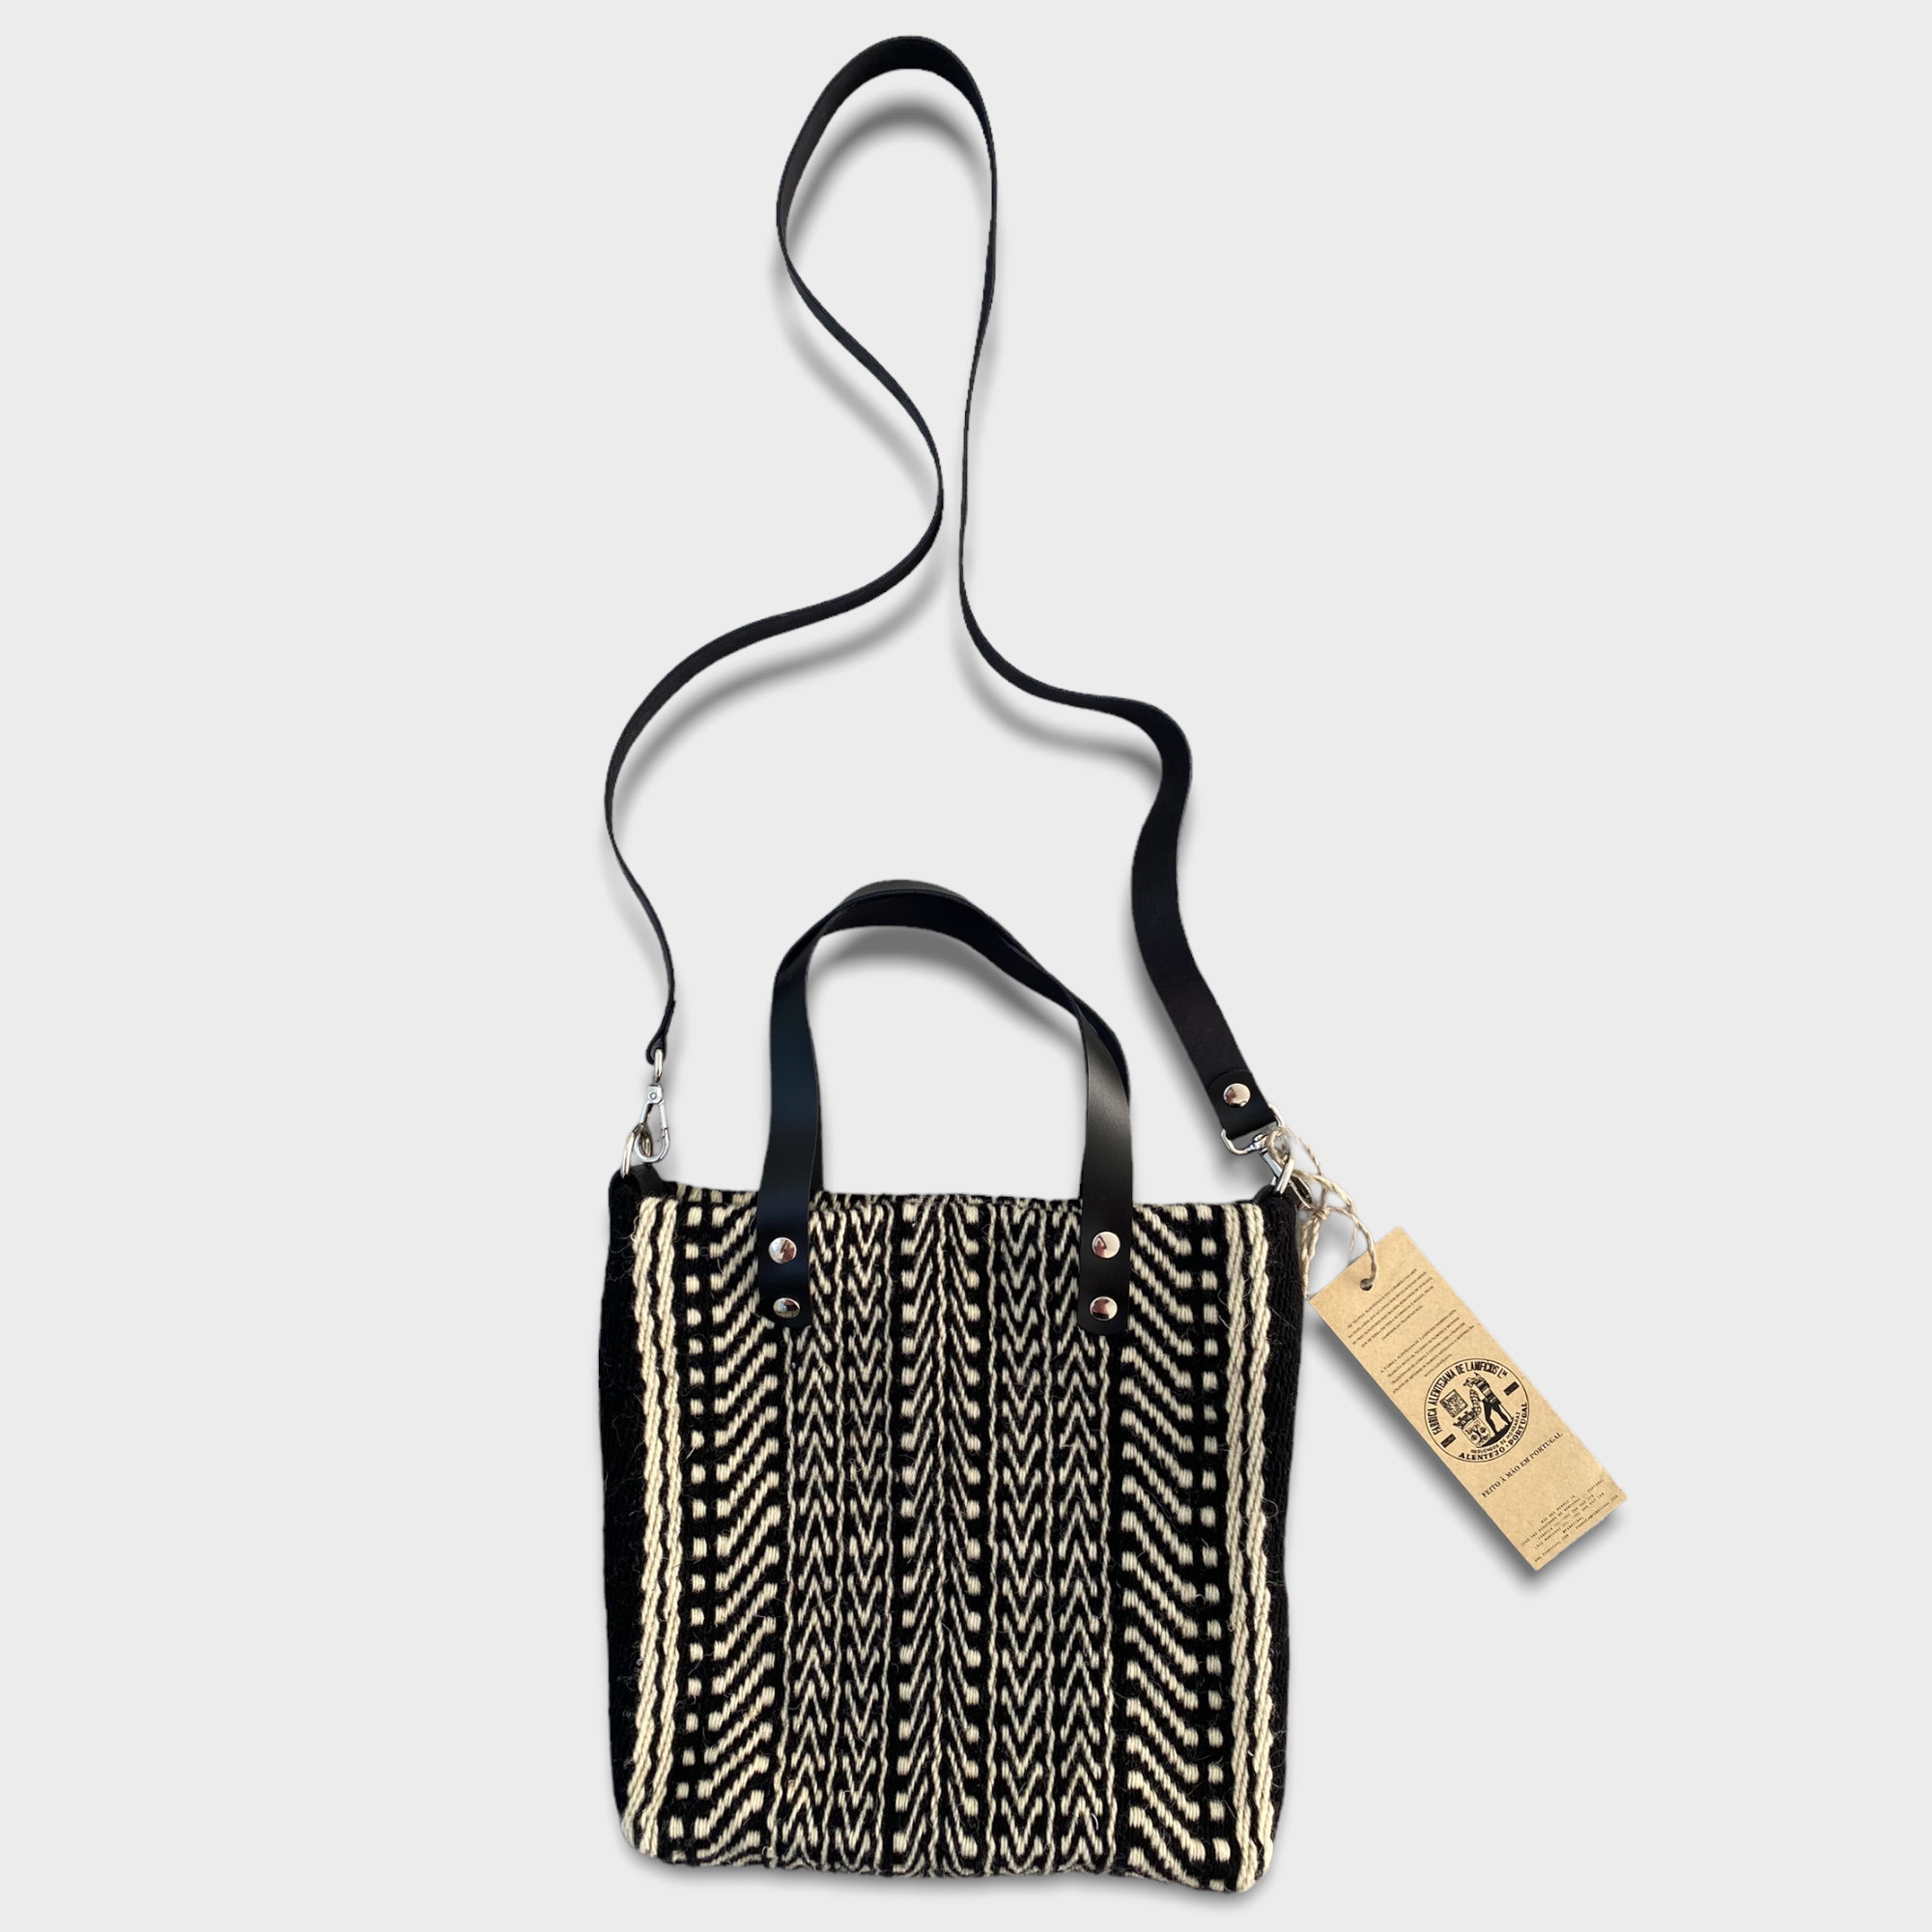 FABRICAAL // Leather Small Handbag "Amendoeira" Black/Ecru